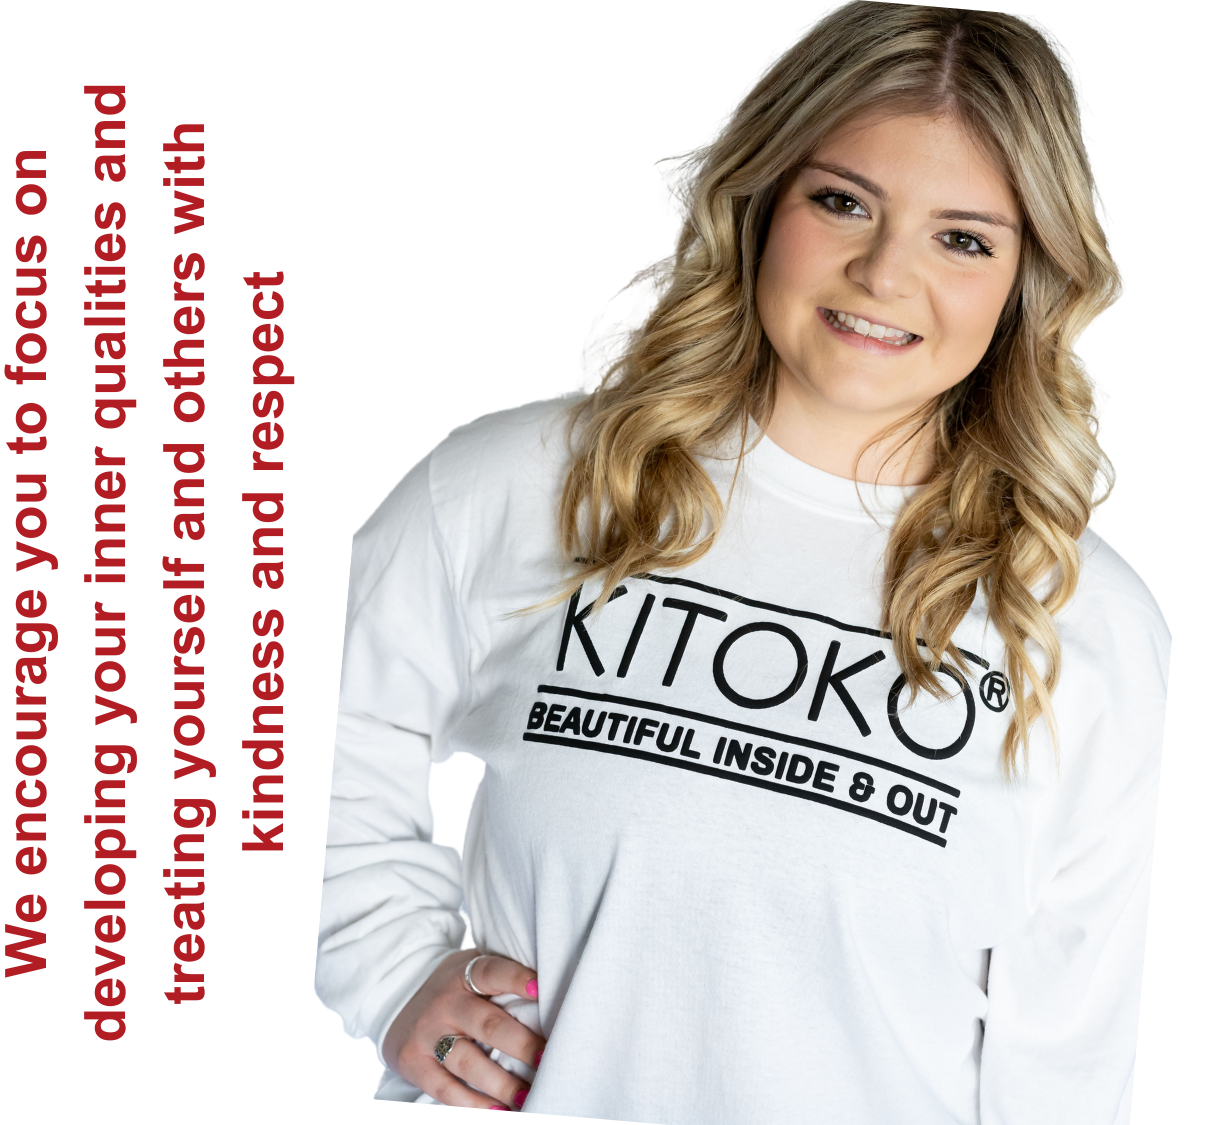 Kitoko logo/Slogan Long Sleeve Tee